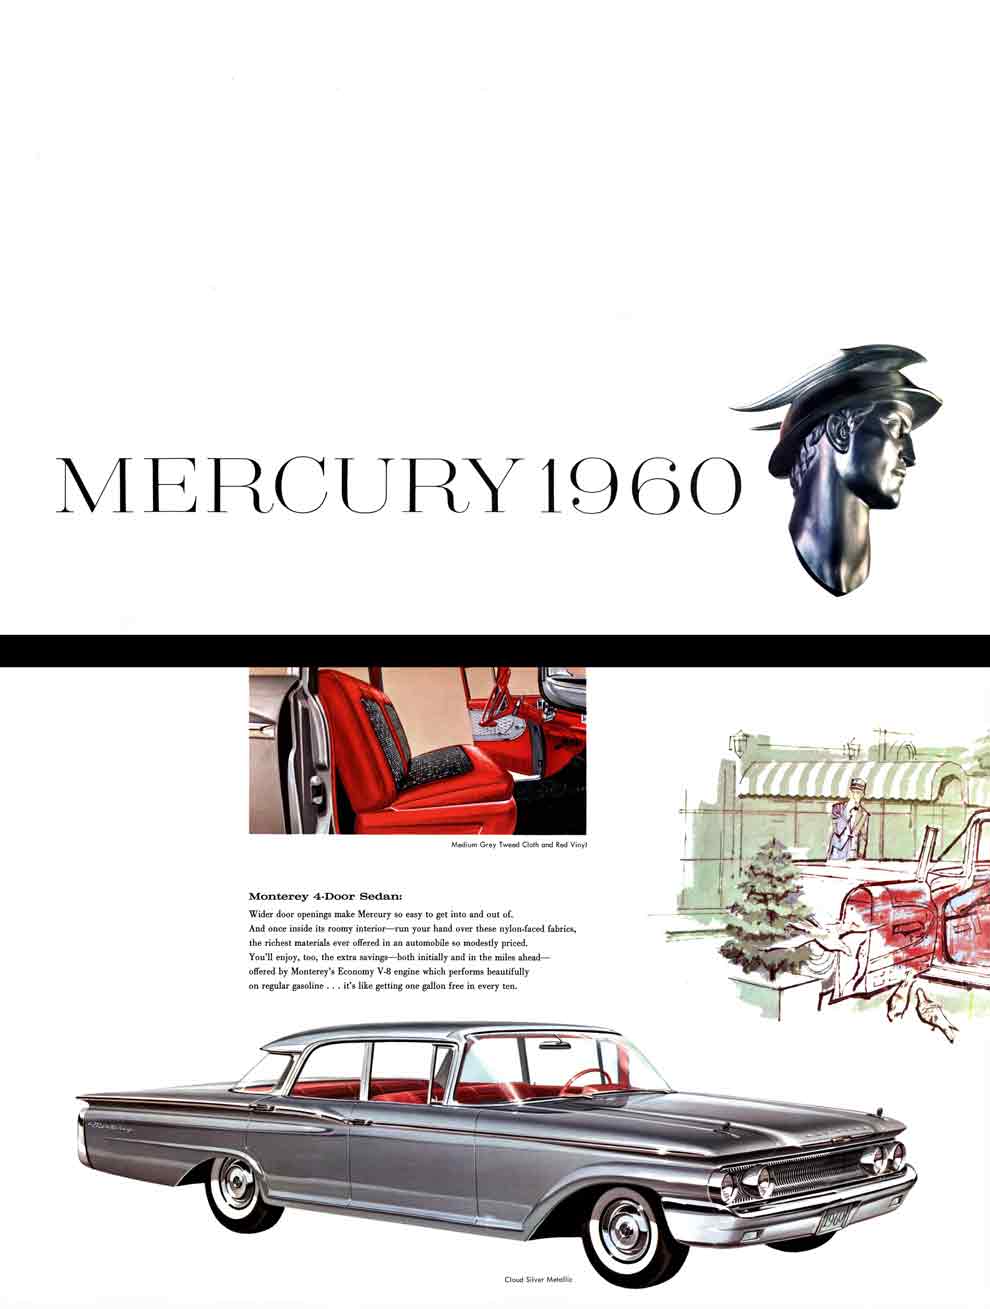 Mercury 1960 - 1960 Mercury: The Best-Built Car in America Today